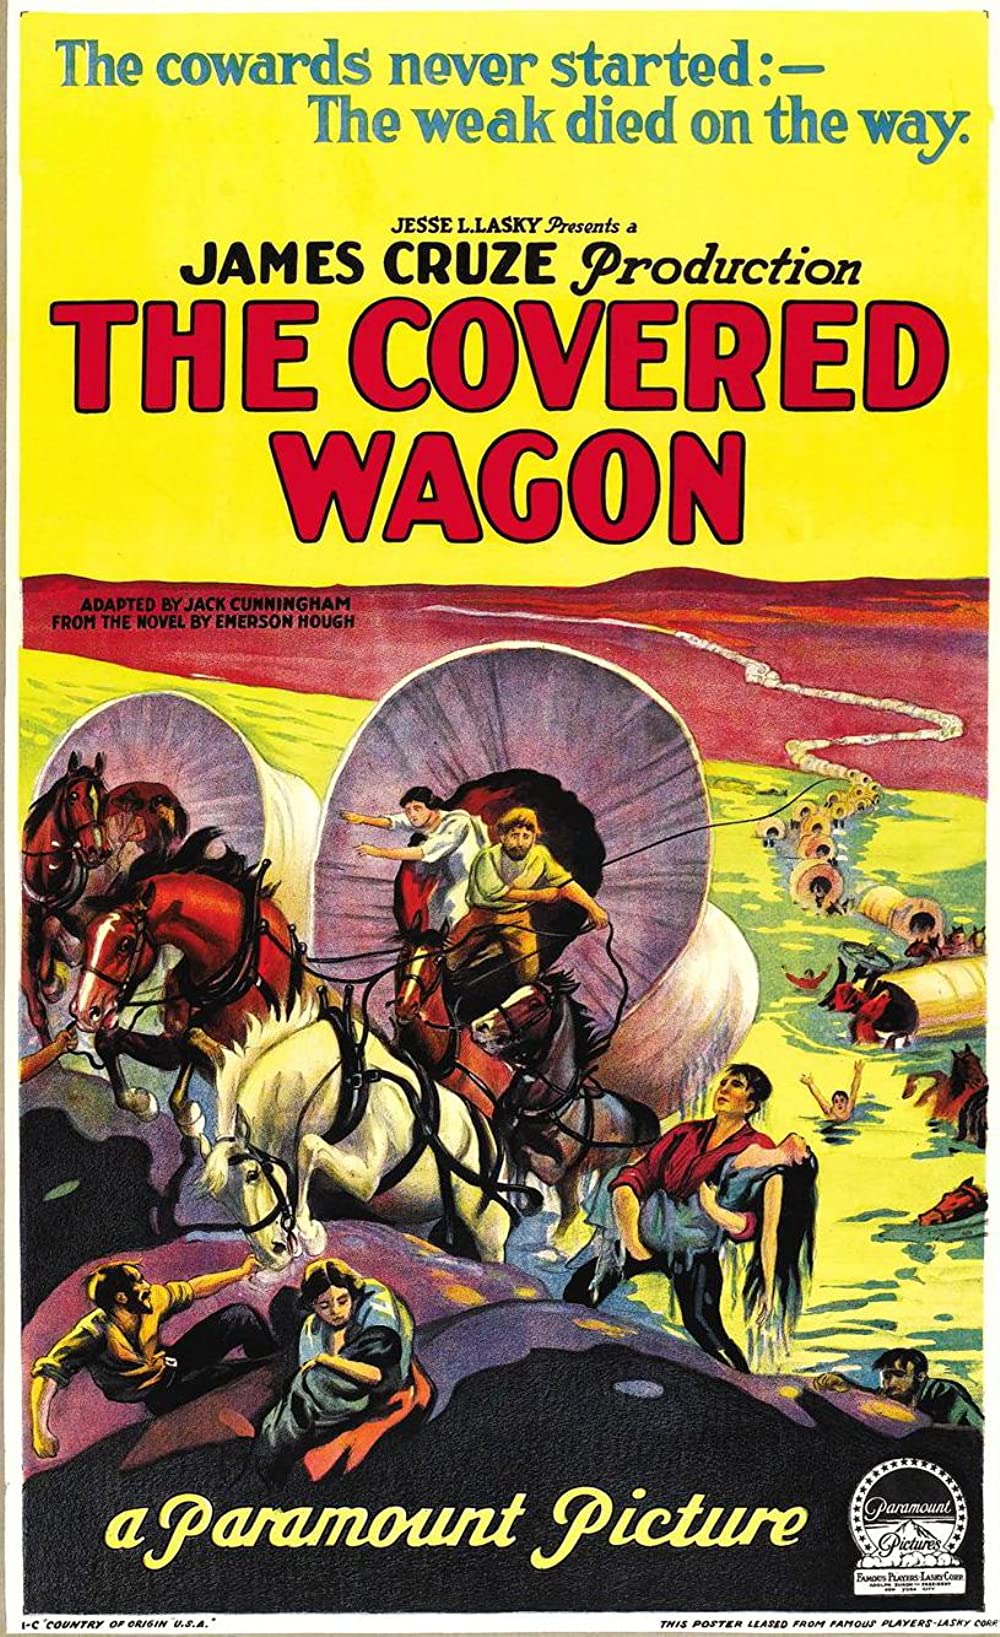 Filmbeschreibung zu The Covered Wagon